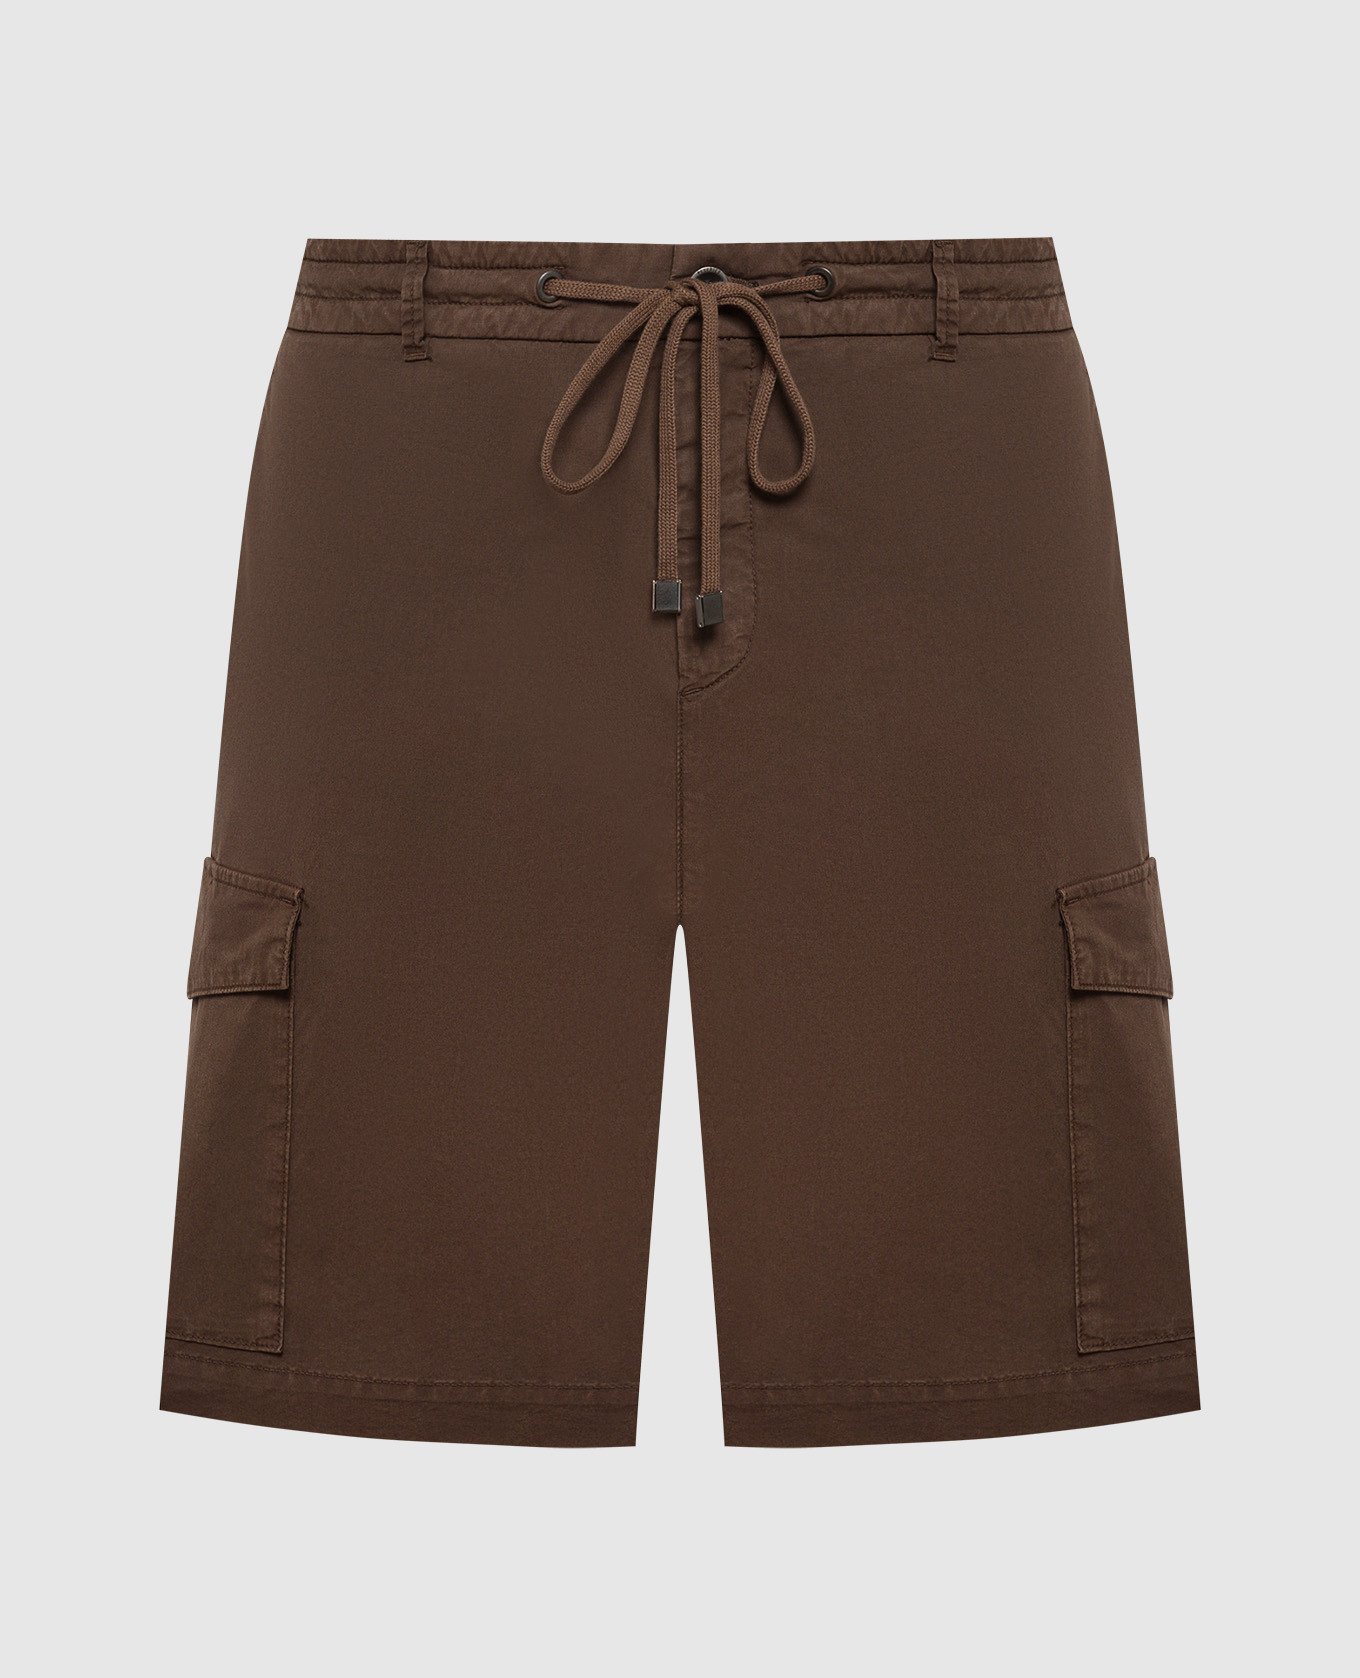 Brown cargo shorts with metallic logo